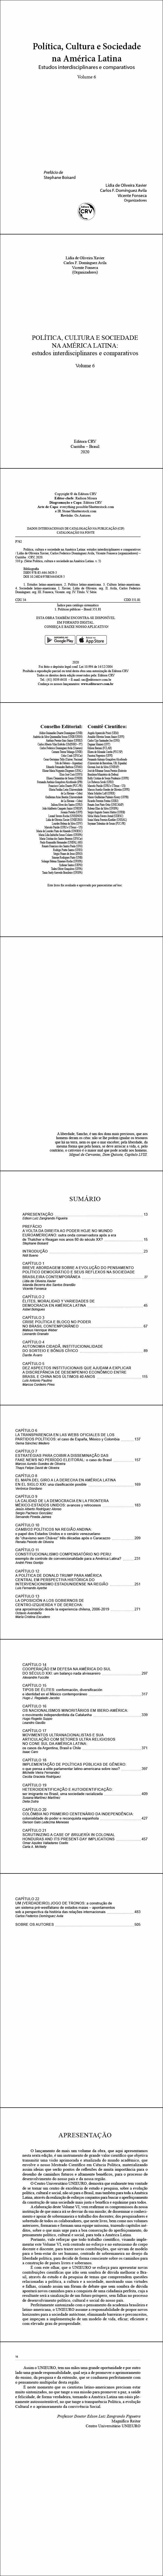 POLÍTICA, CULTURA E SOCIEDADE NA AMÉRICA LATINA: <br>estudos interdisciplinares e comparativos <br>Volume 6